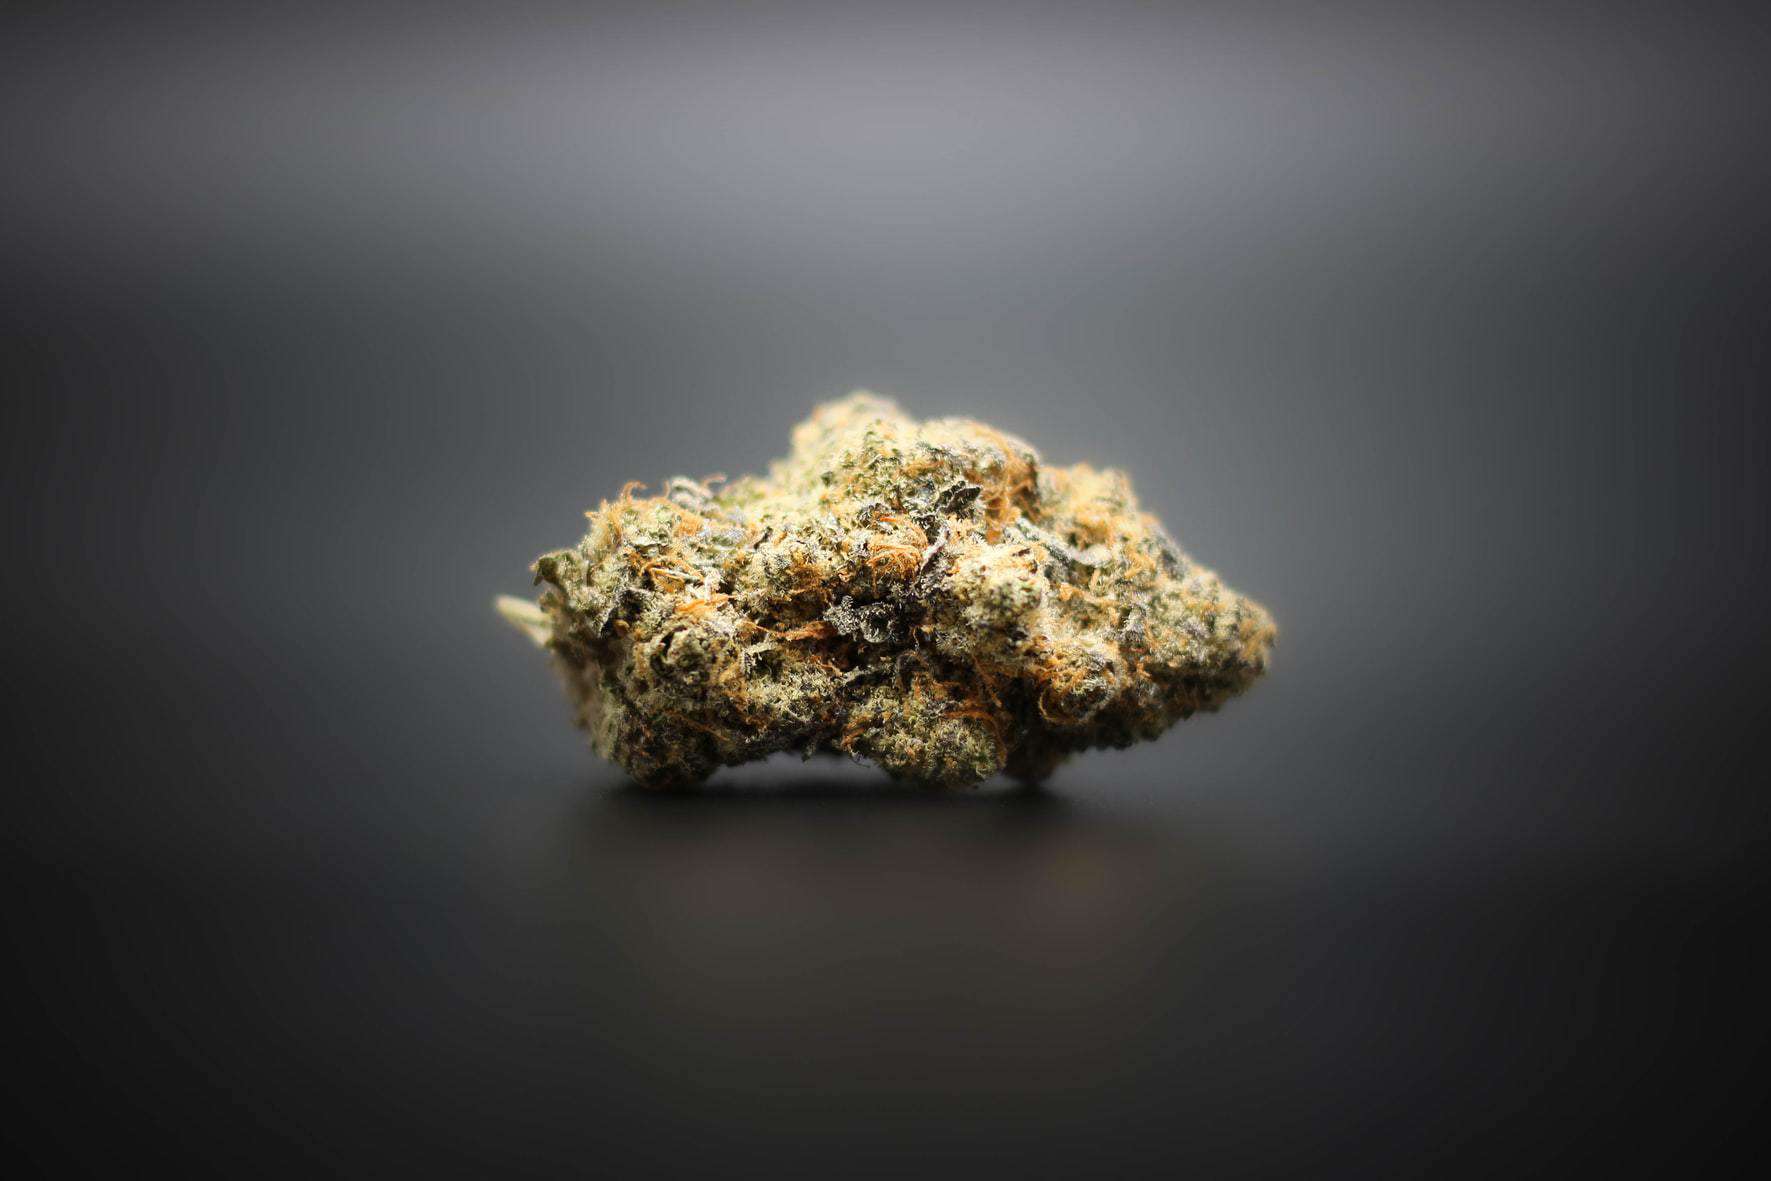 delta 9 strain of cannabis on black surface